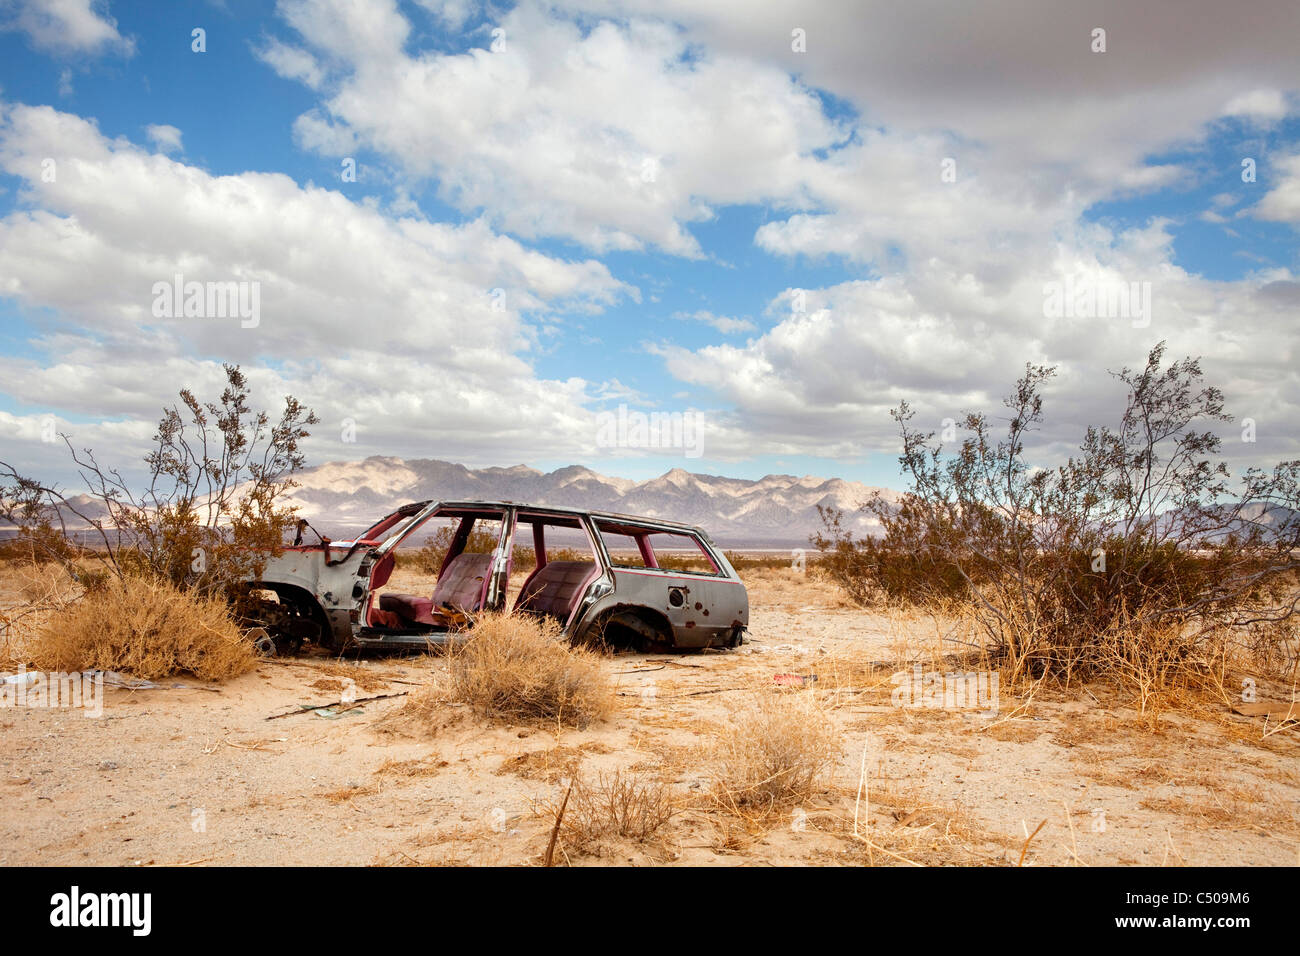 Wrecked car in barren area Stock Photo